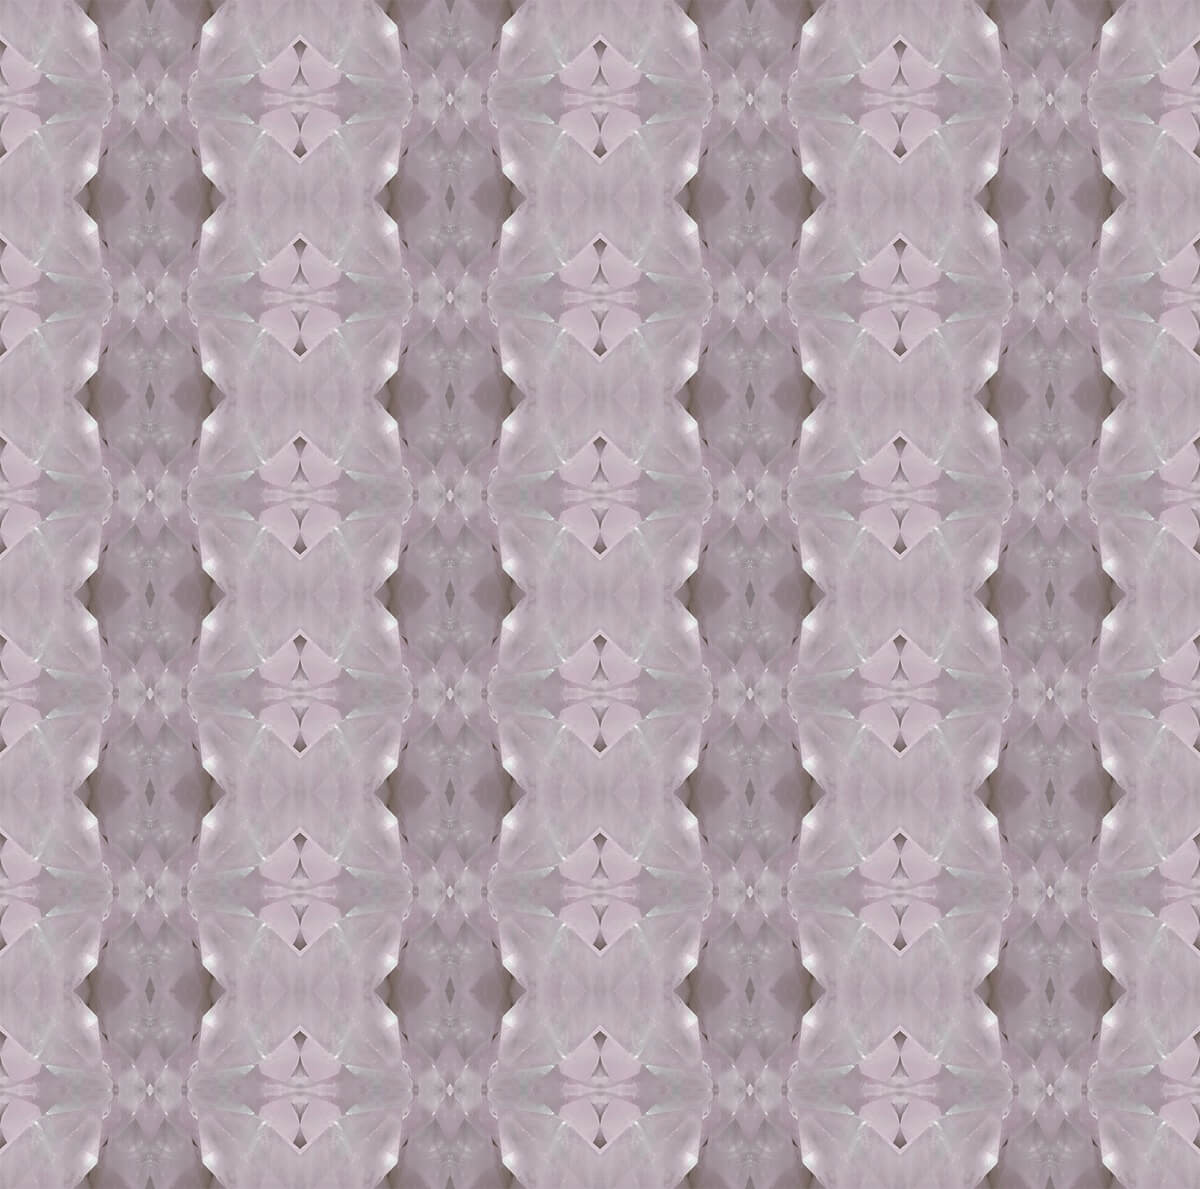 Ghost Quartz pattern in natural